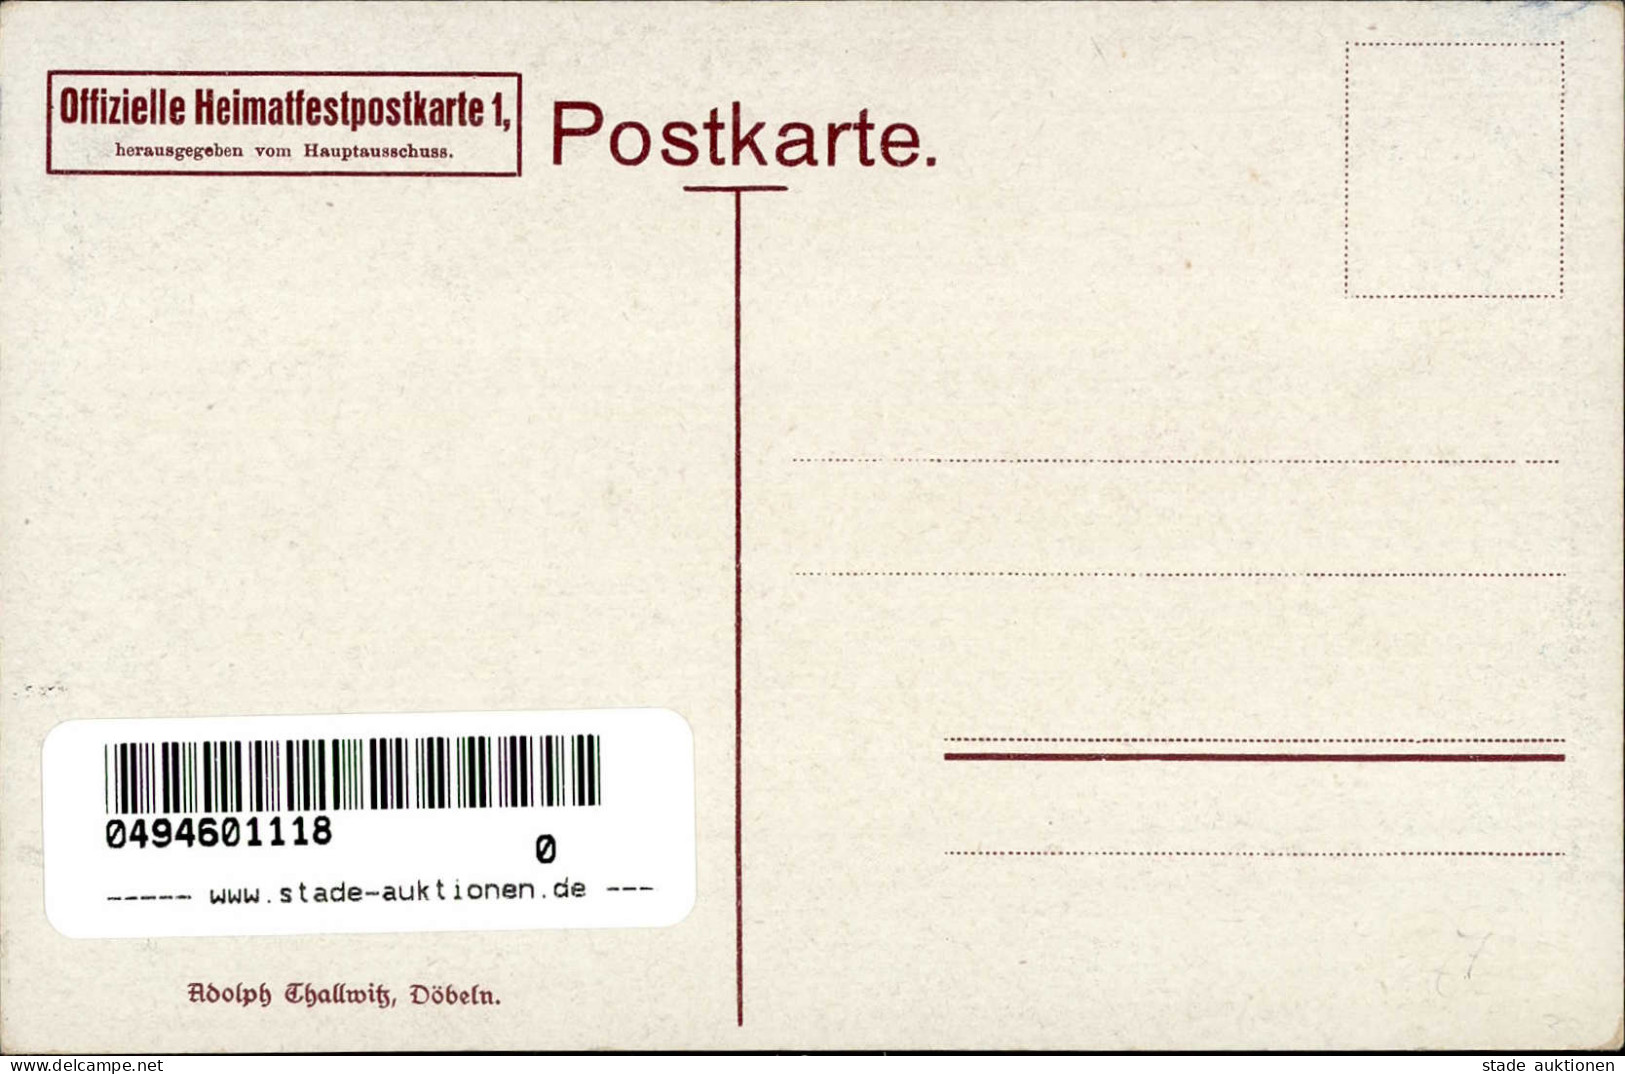 Döbeln (o-7300) Heimatfest 1914 I- - Other & Unclassified